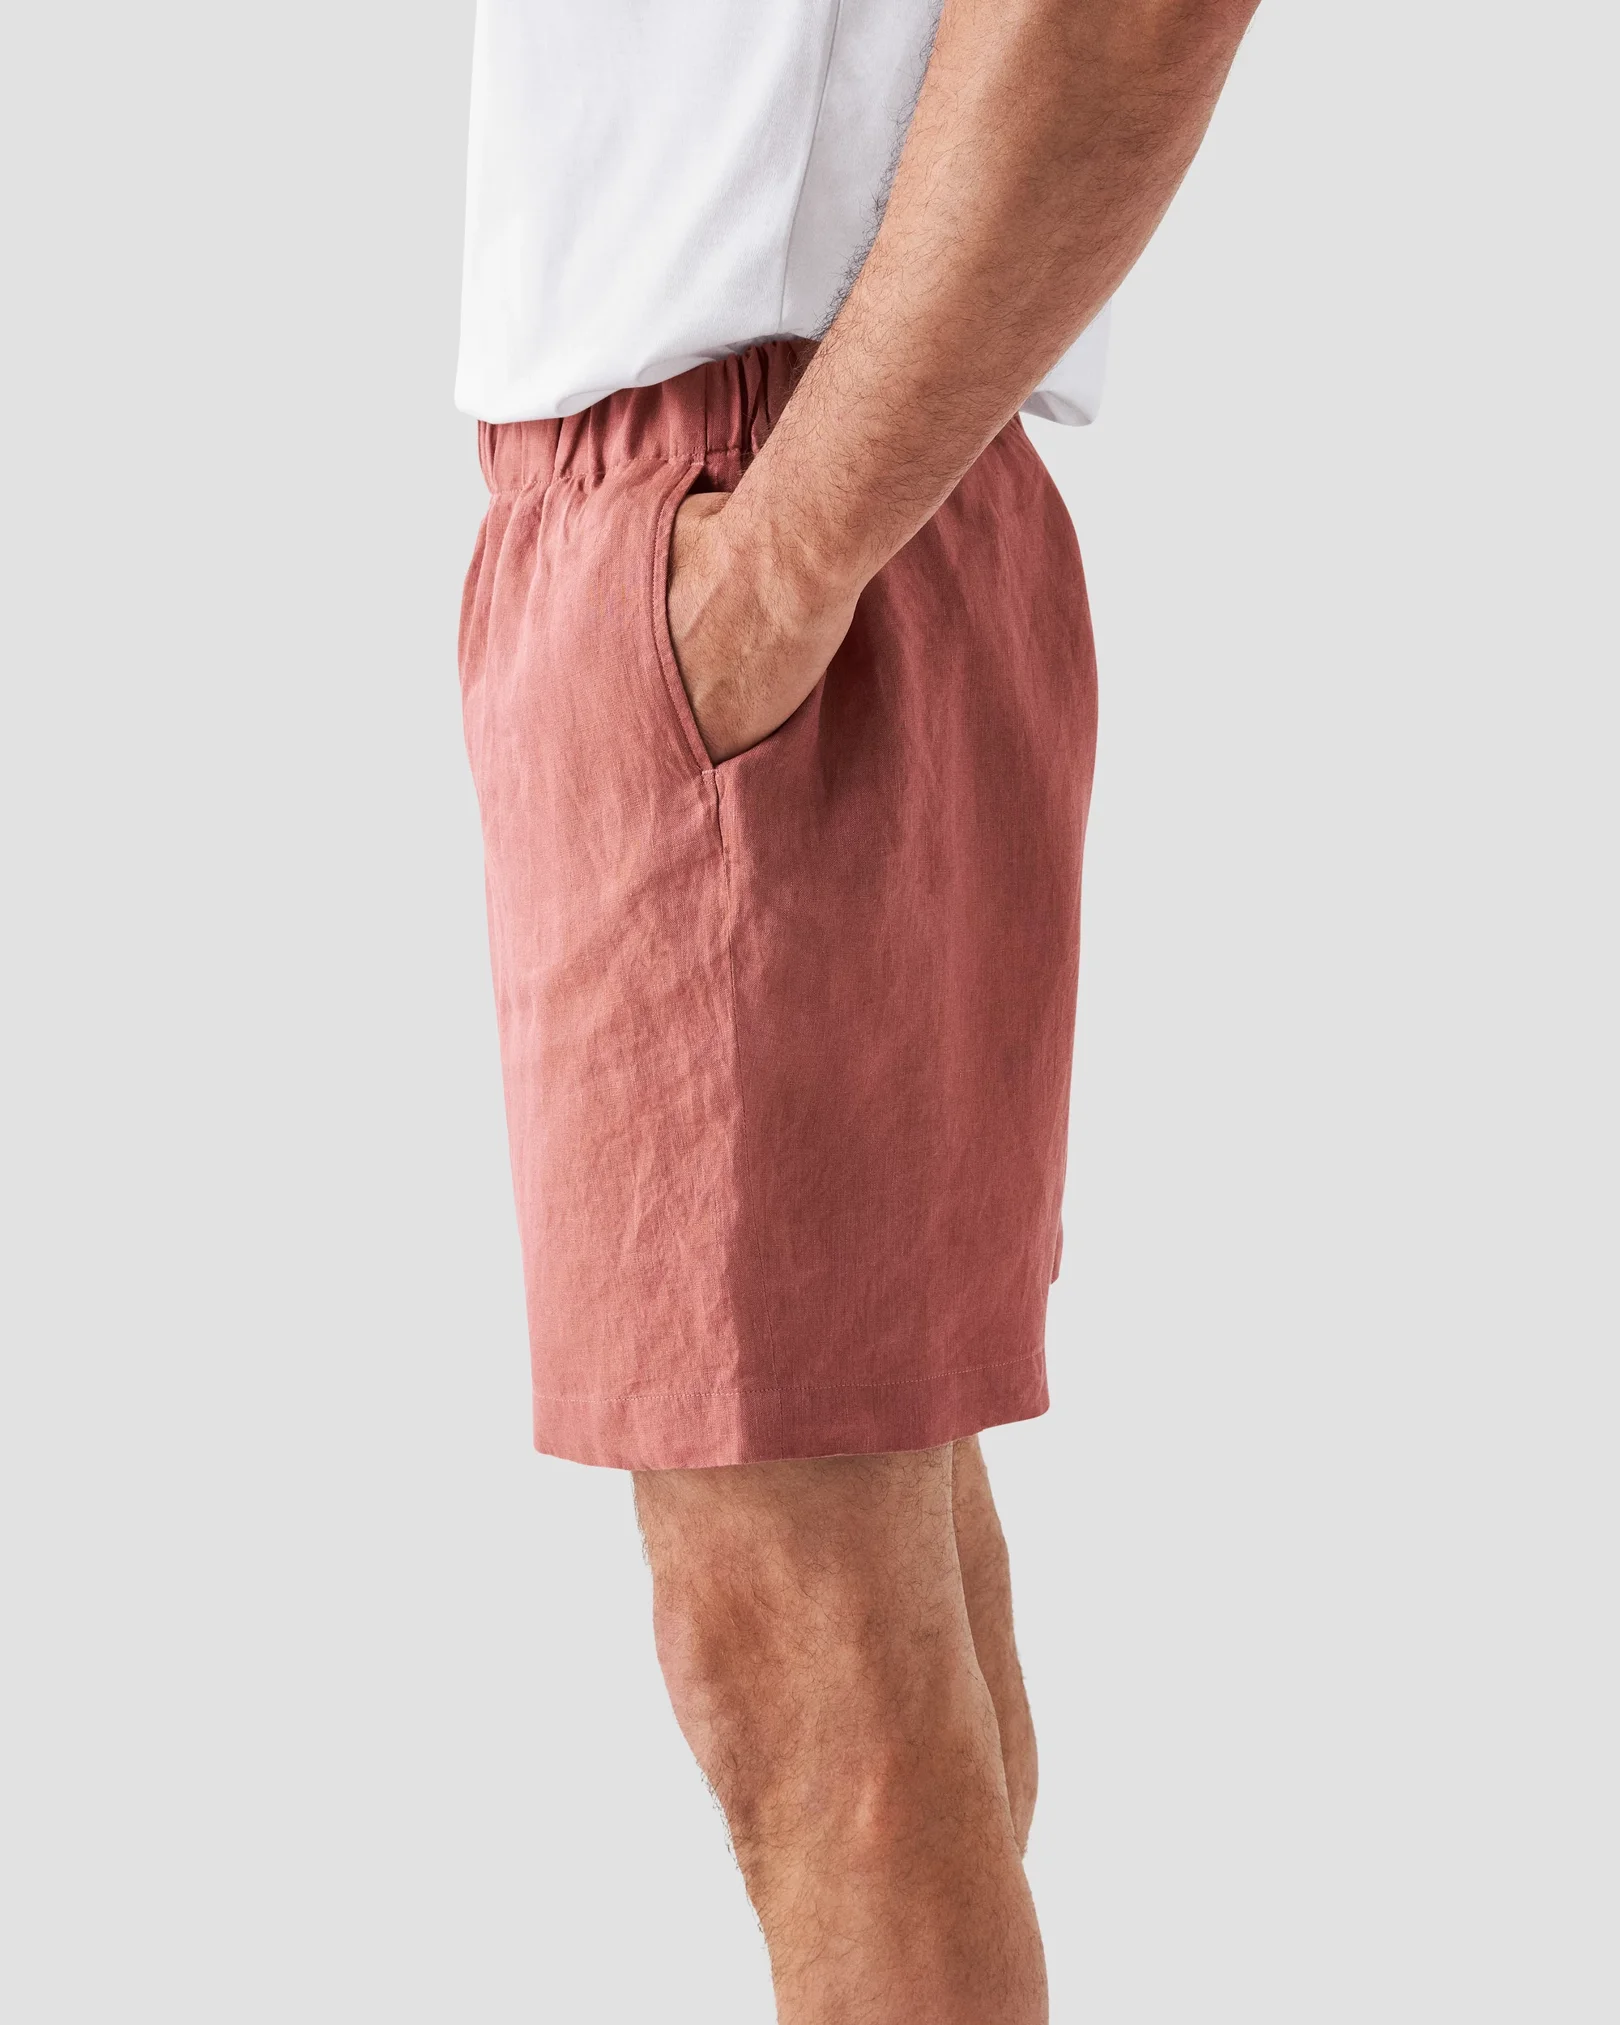 Eton - red linnen shorts